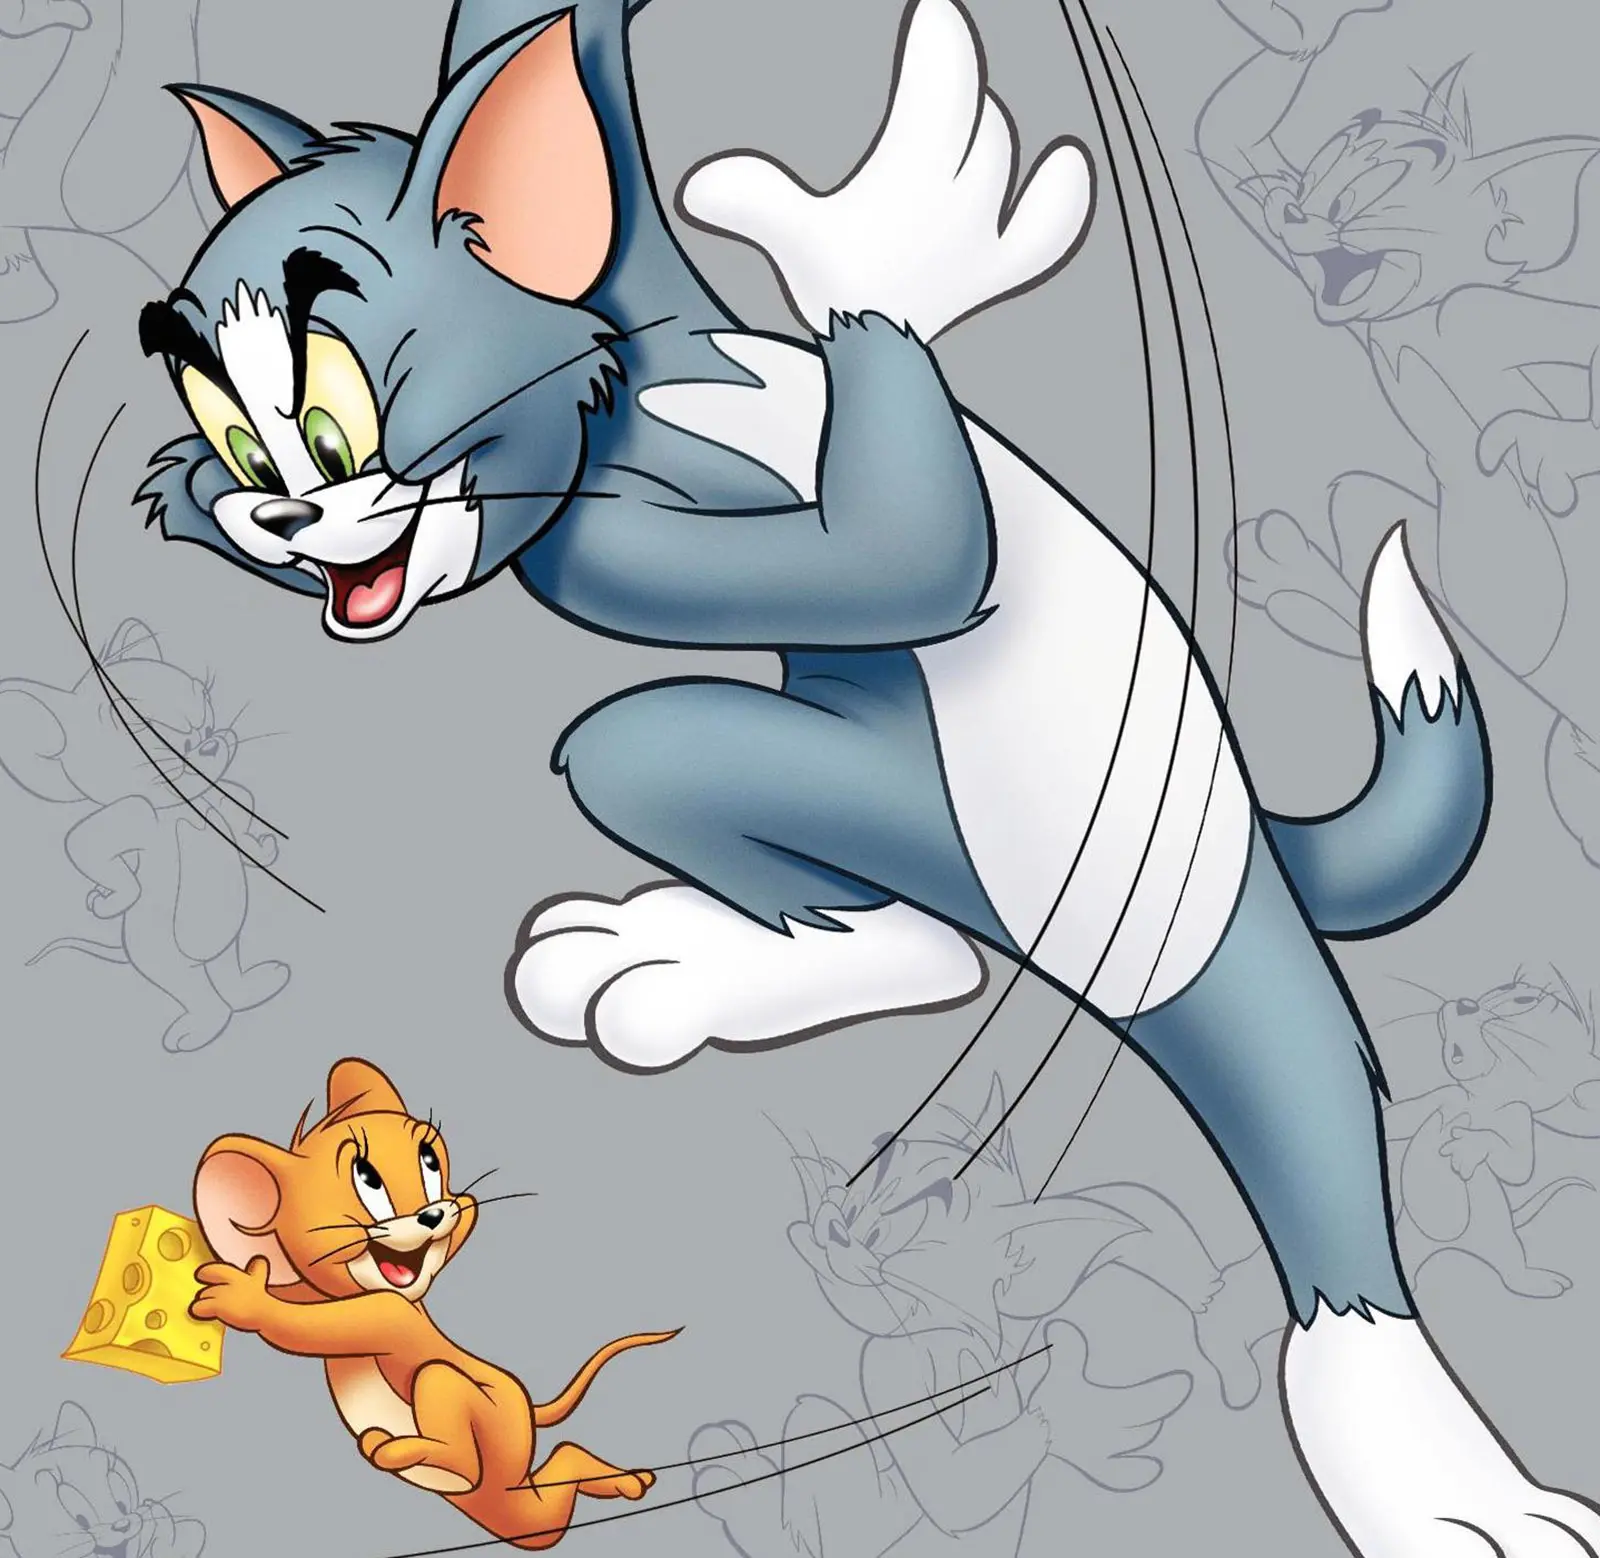 Gambar Tom and Jerry yang paling lucu, lucu, lucu